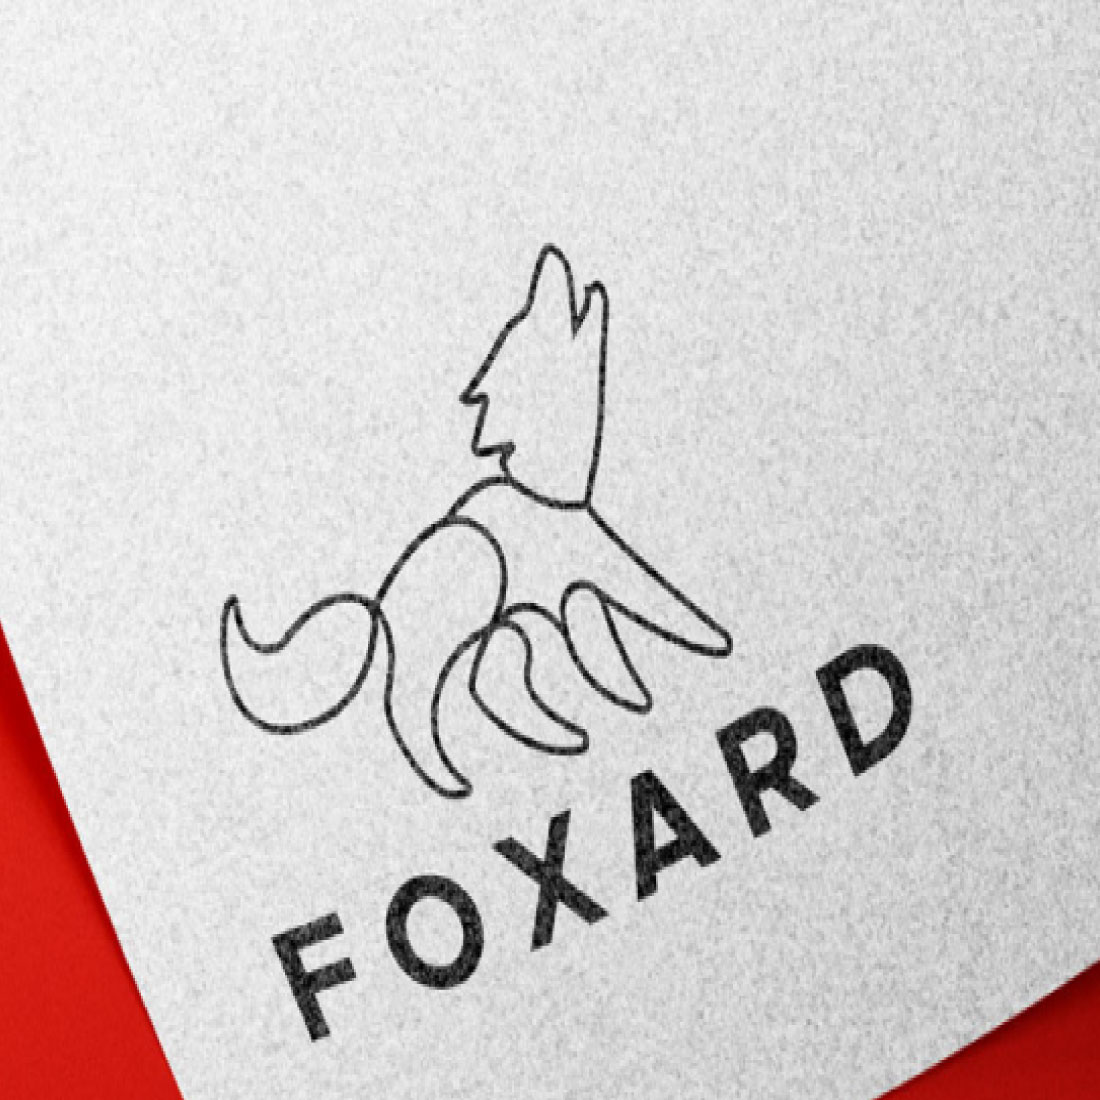 foxard2